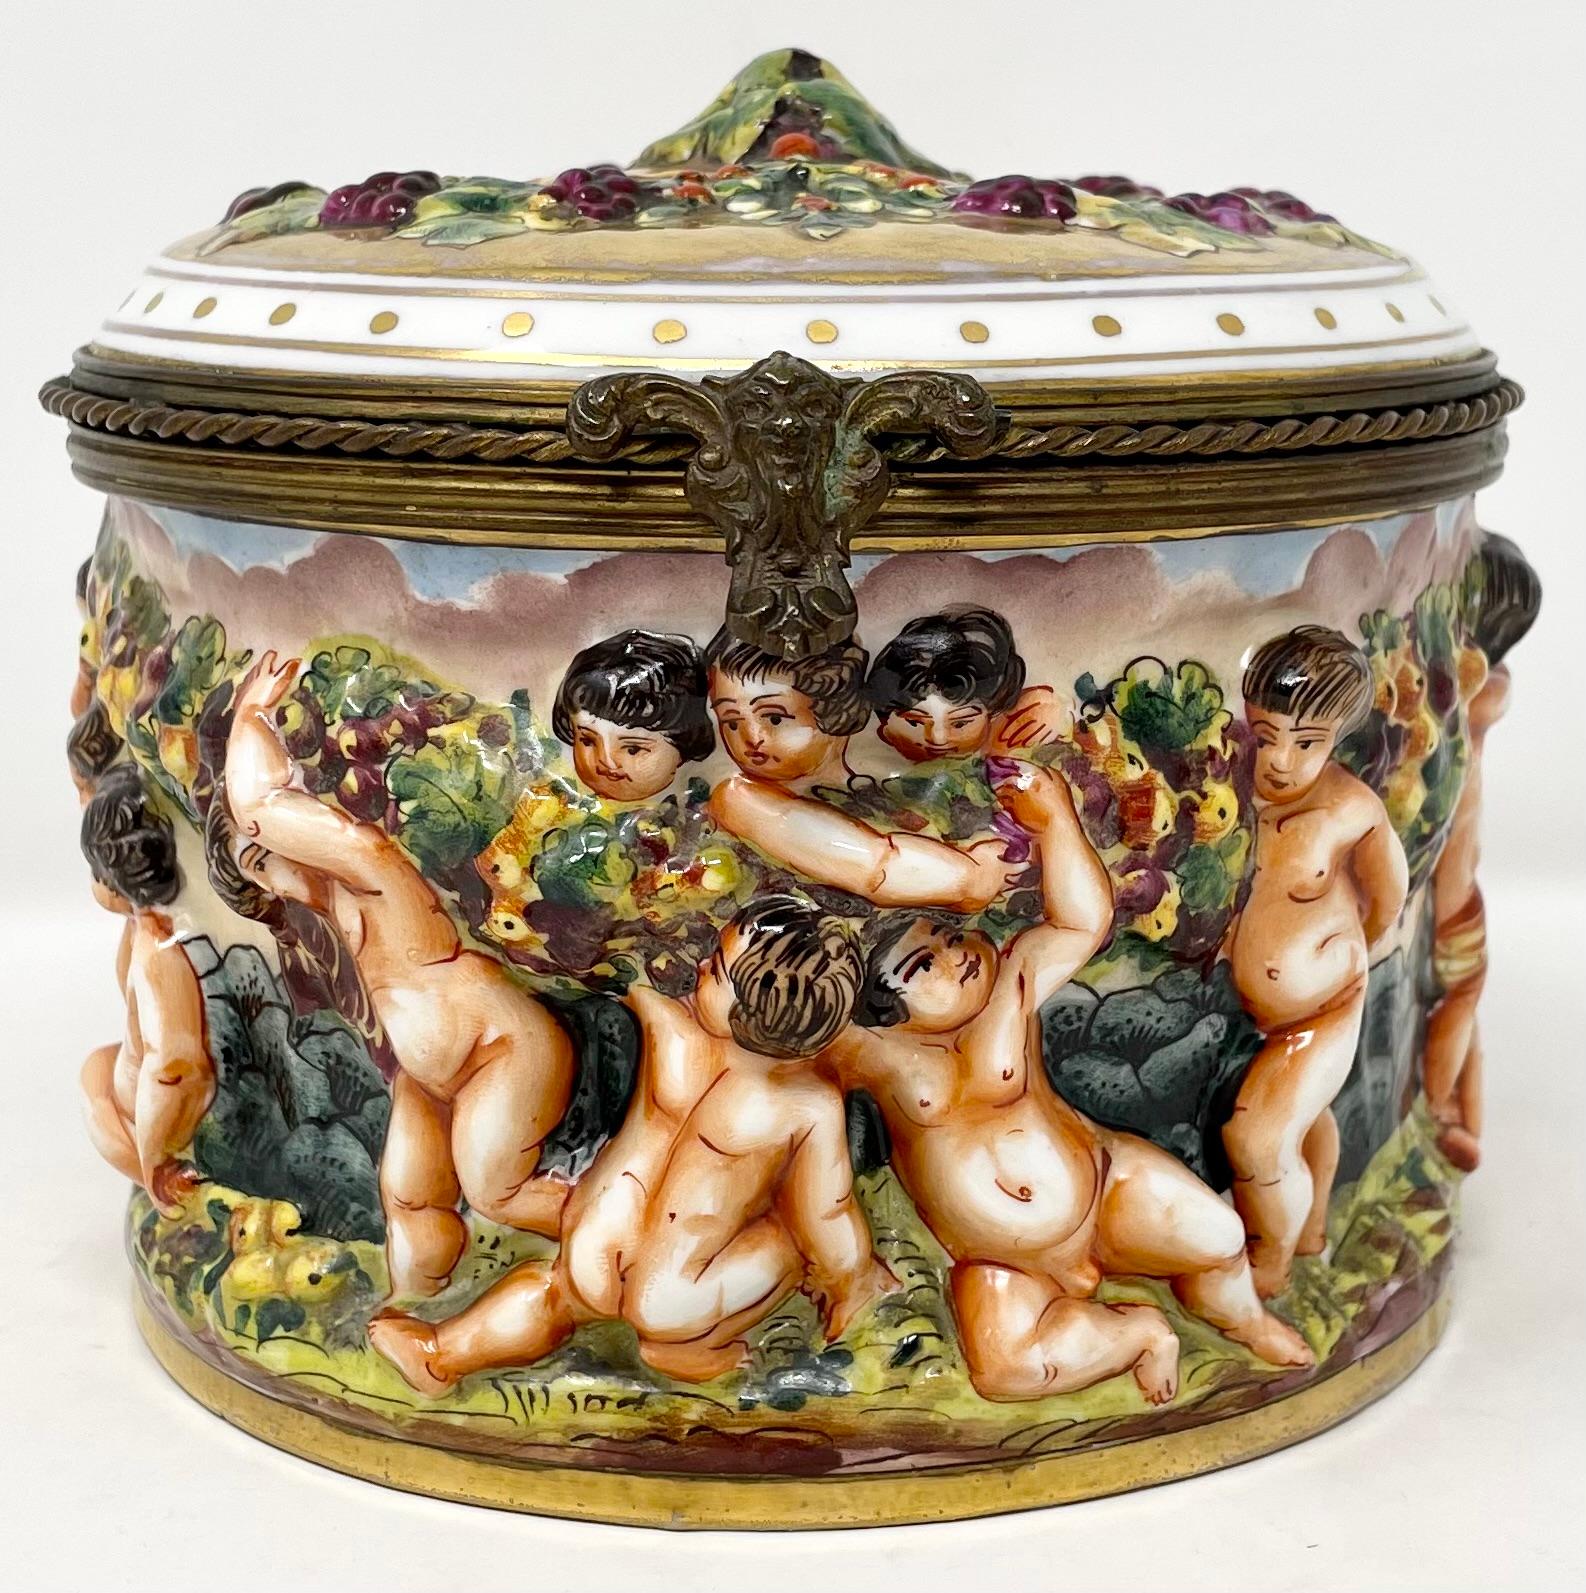 Antique Italian Capo di Monte porcelain jewel box with brass mounts, circa 1880-1890.